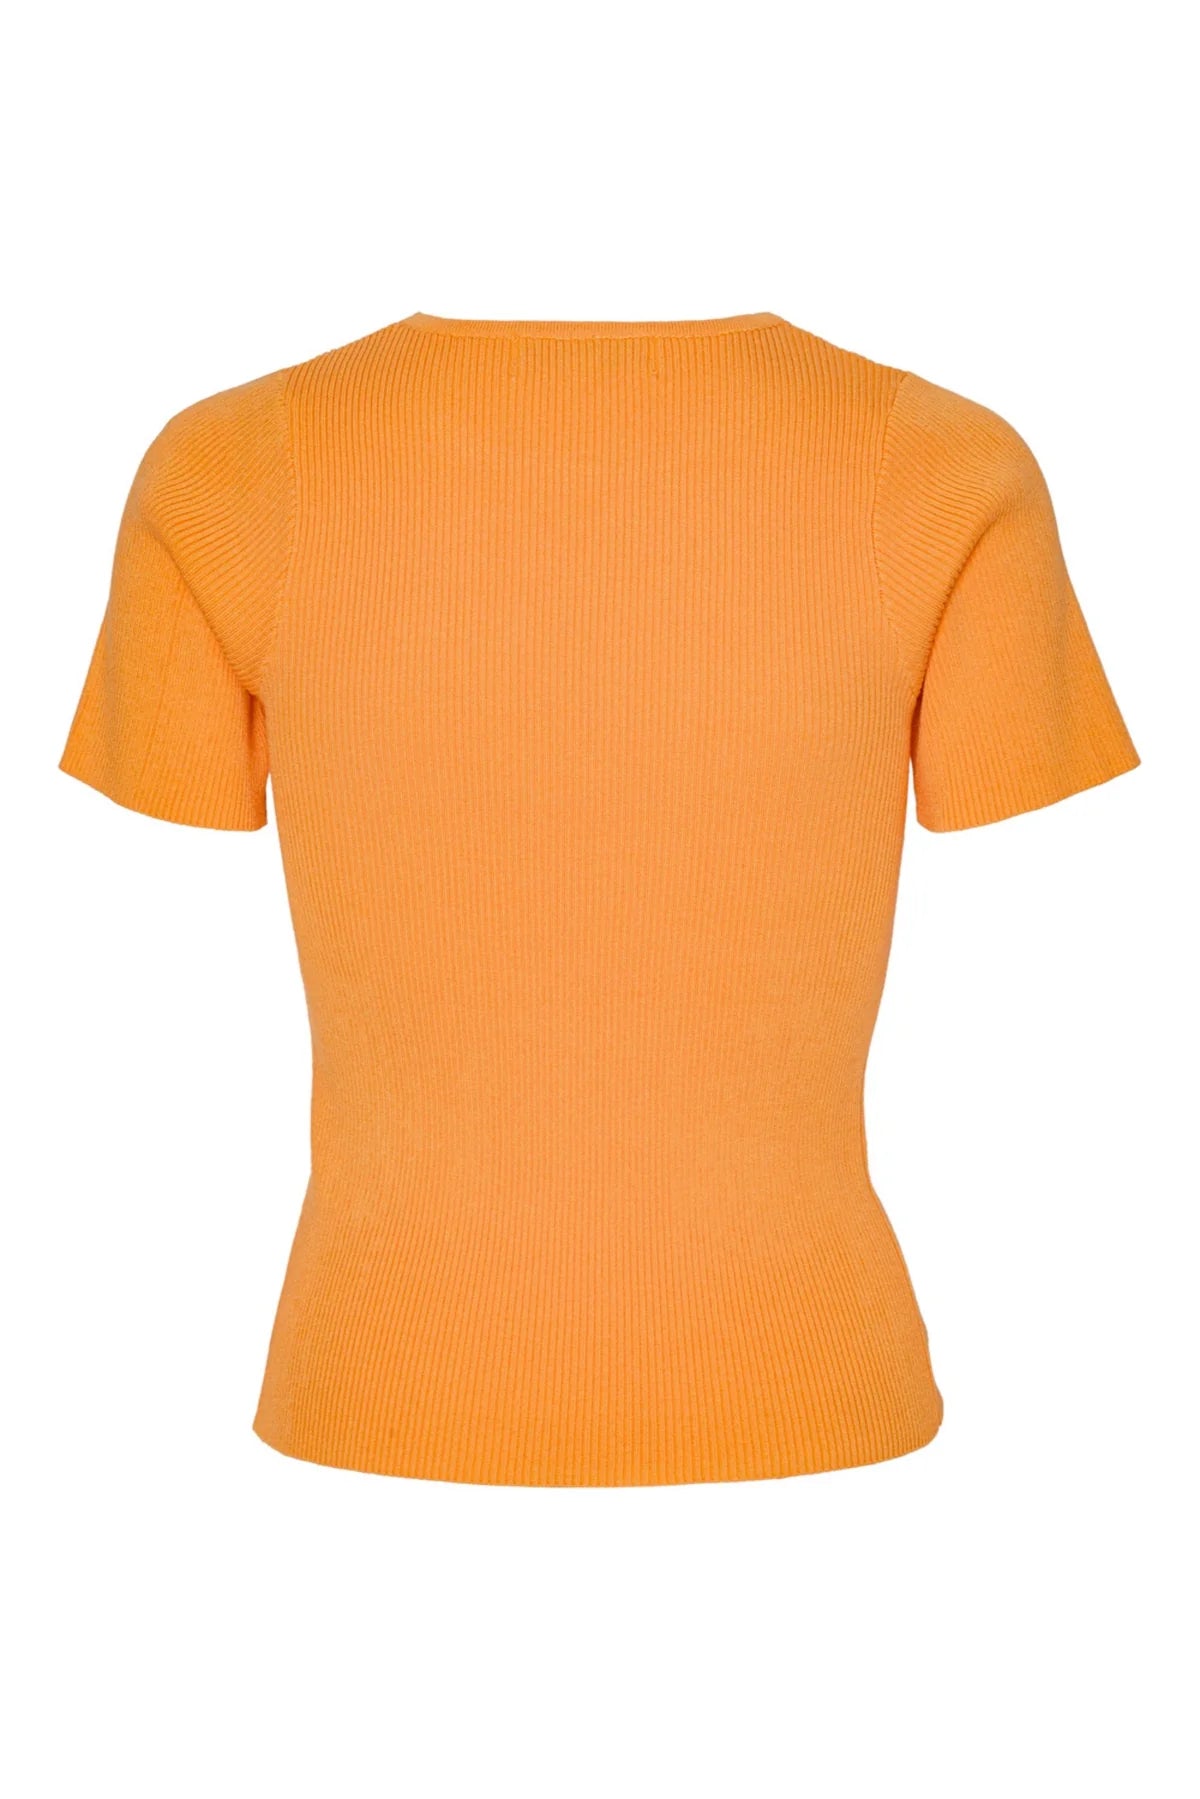 Rib Knit Short Sleeve Top Orange